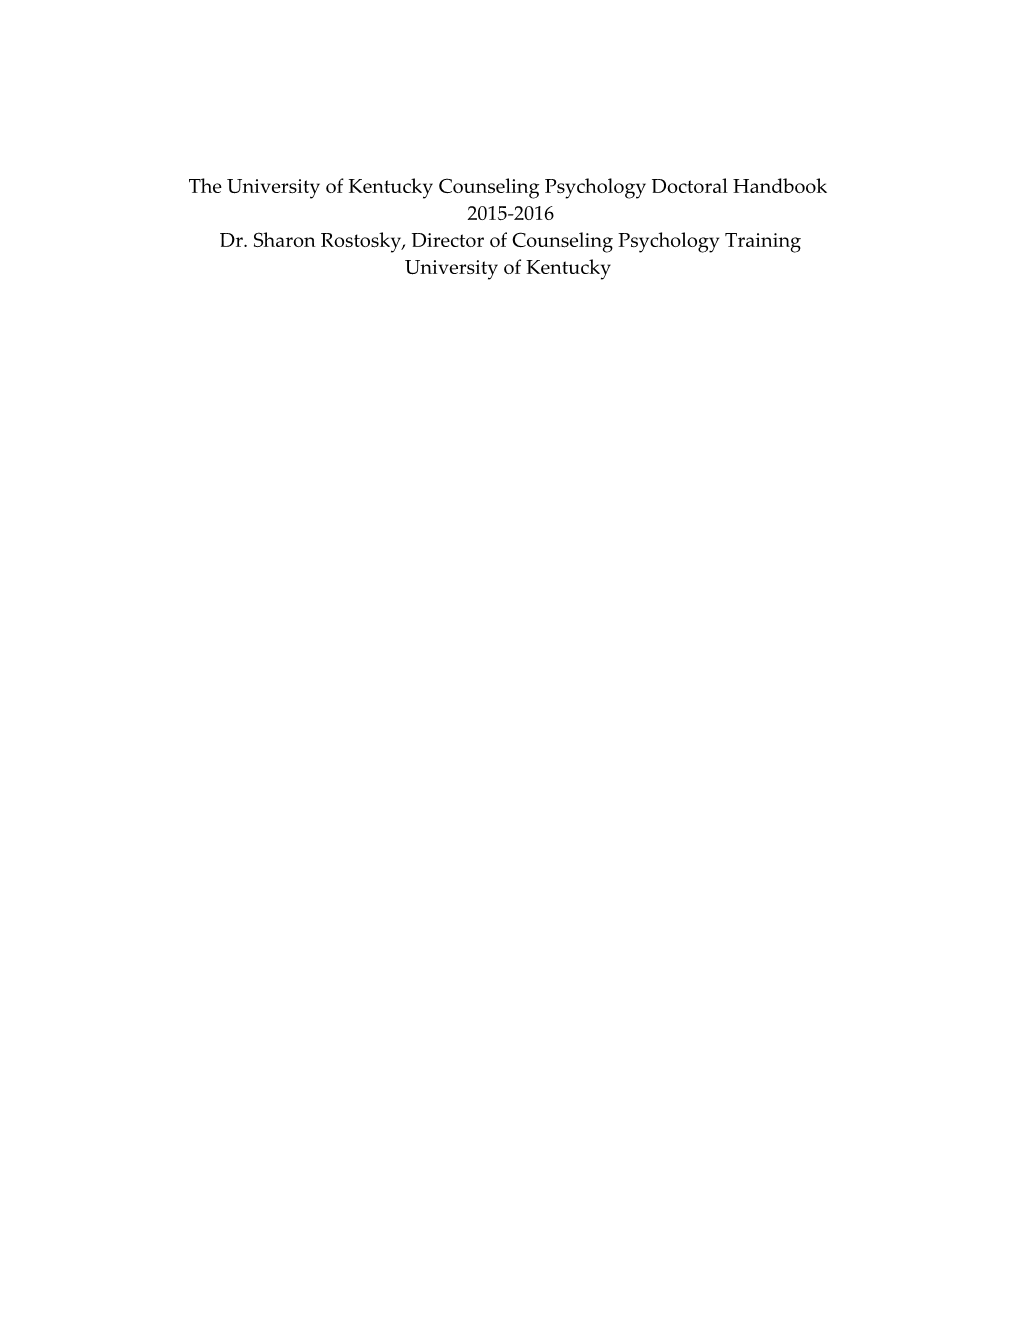 UK Counseling Psychology Doctoral Handbook 2006 s1